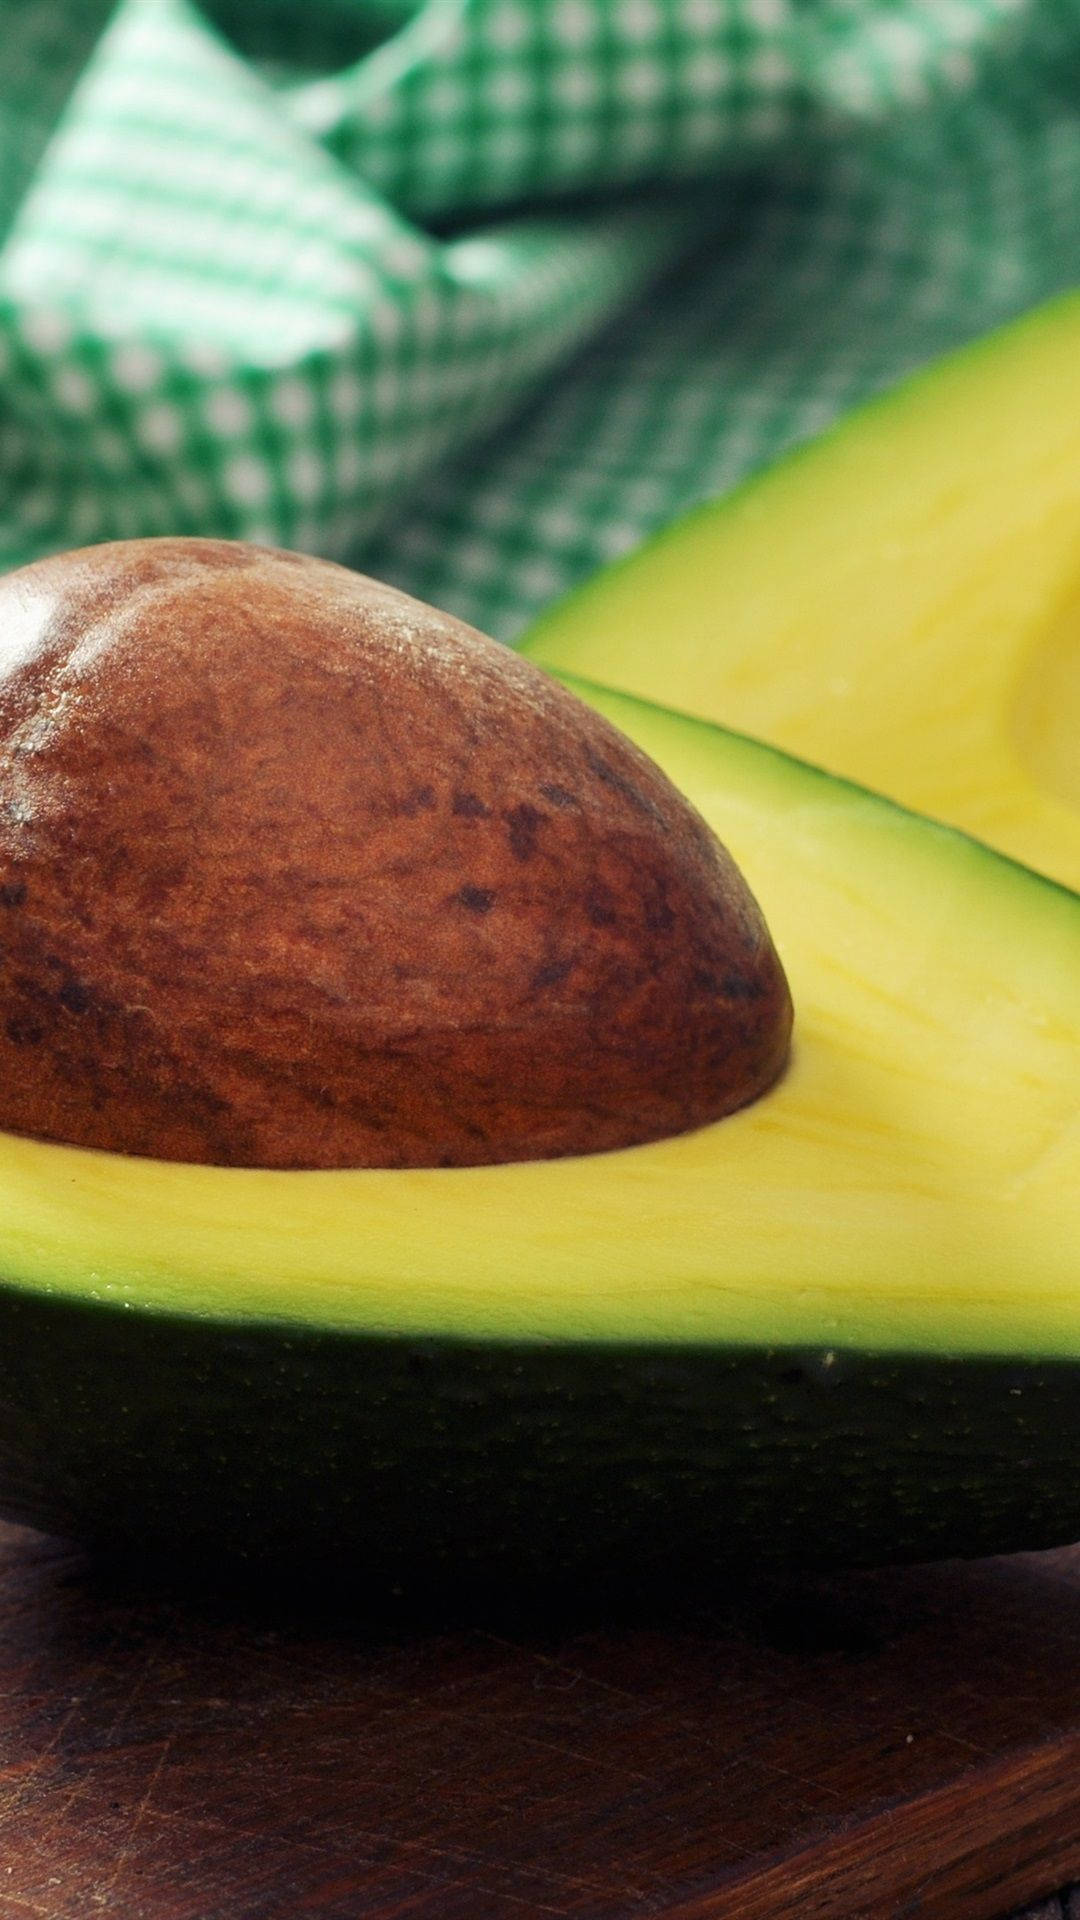 Healthy Green Flesh Avocado Fruit Portrait Picture